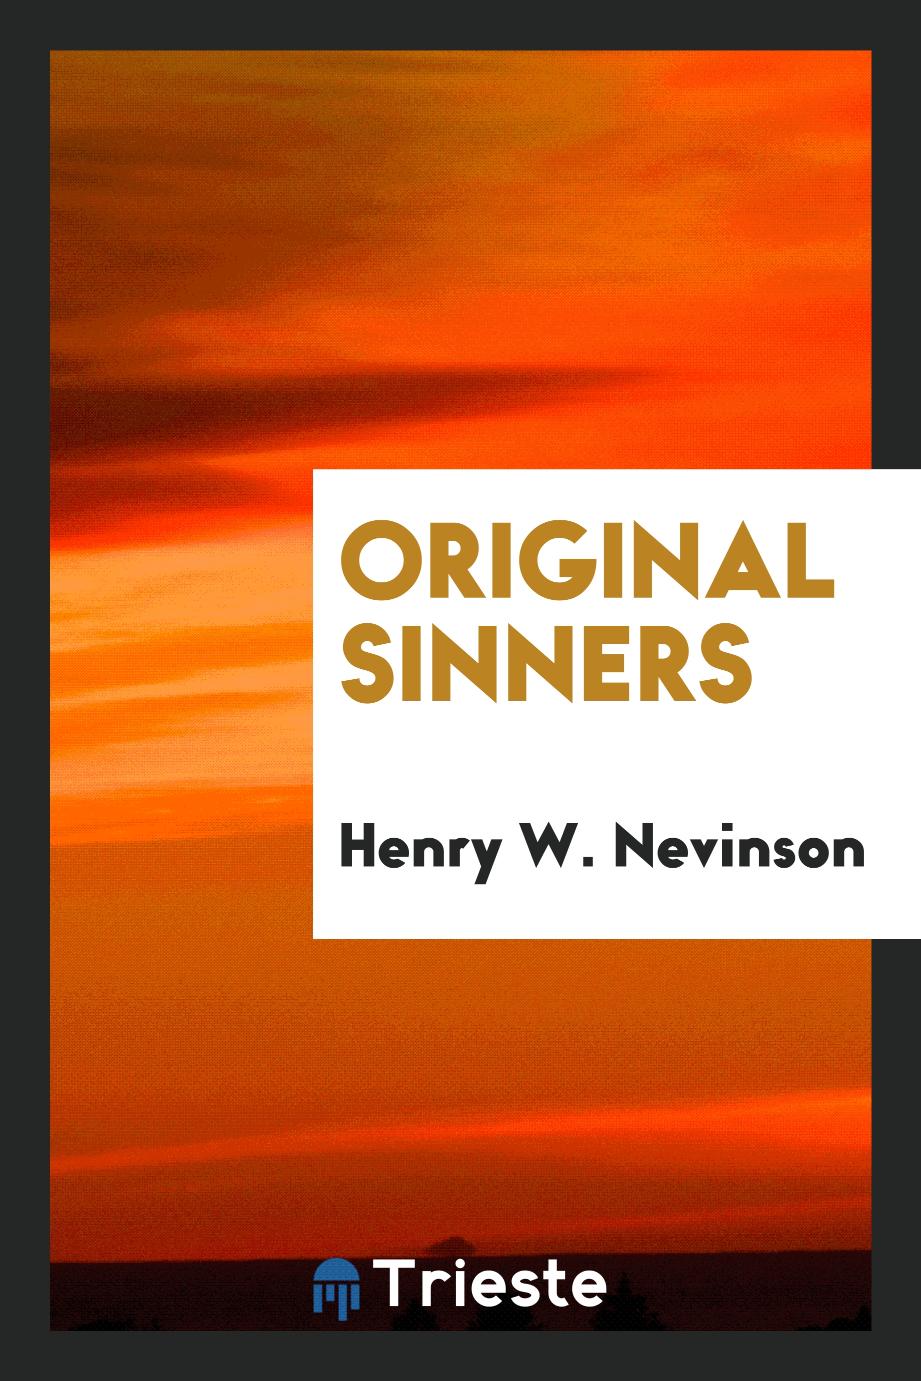 Original sinners